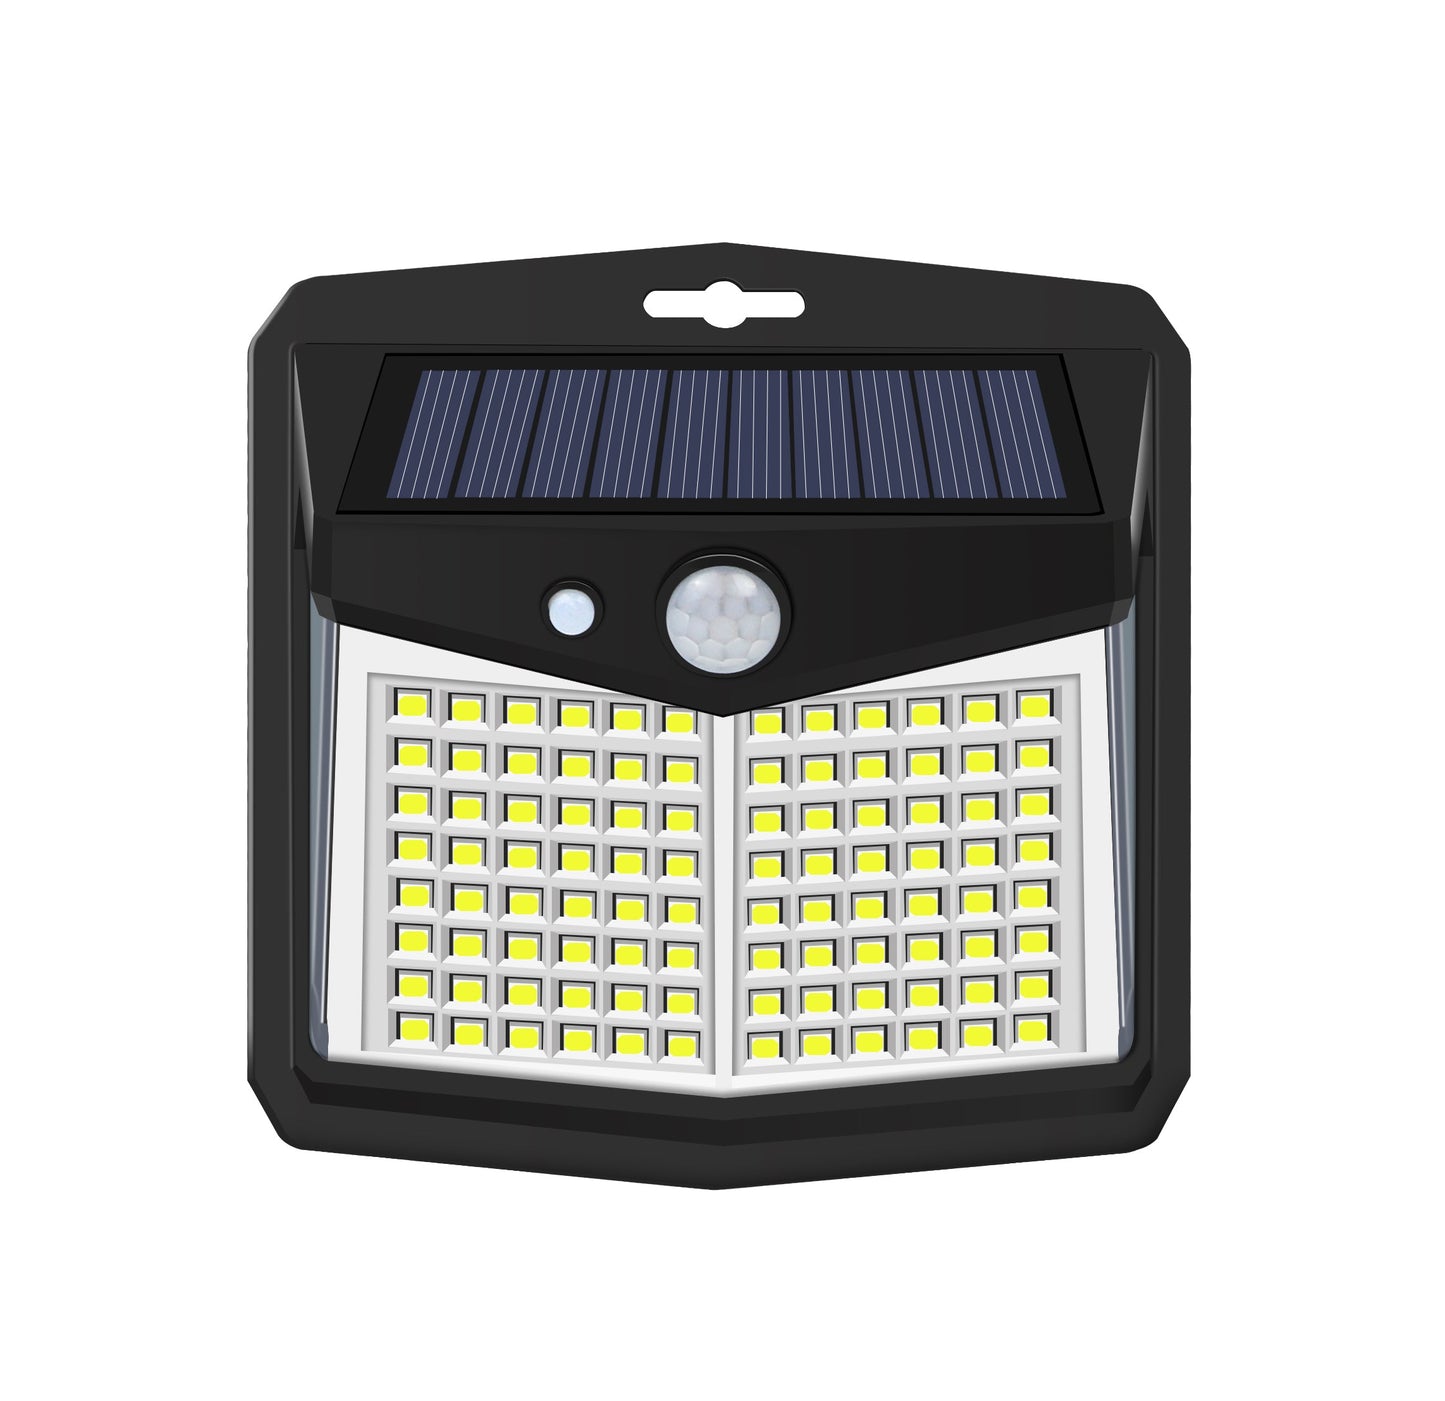 128 LED Solar Security Lights - 3-in-1 Sensor, Constant, Combination Lighting